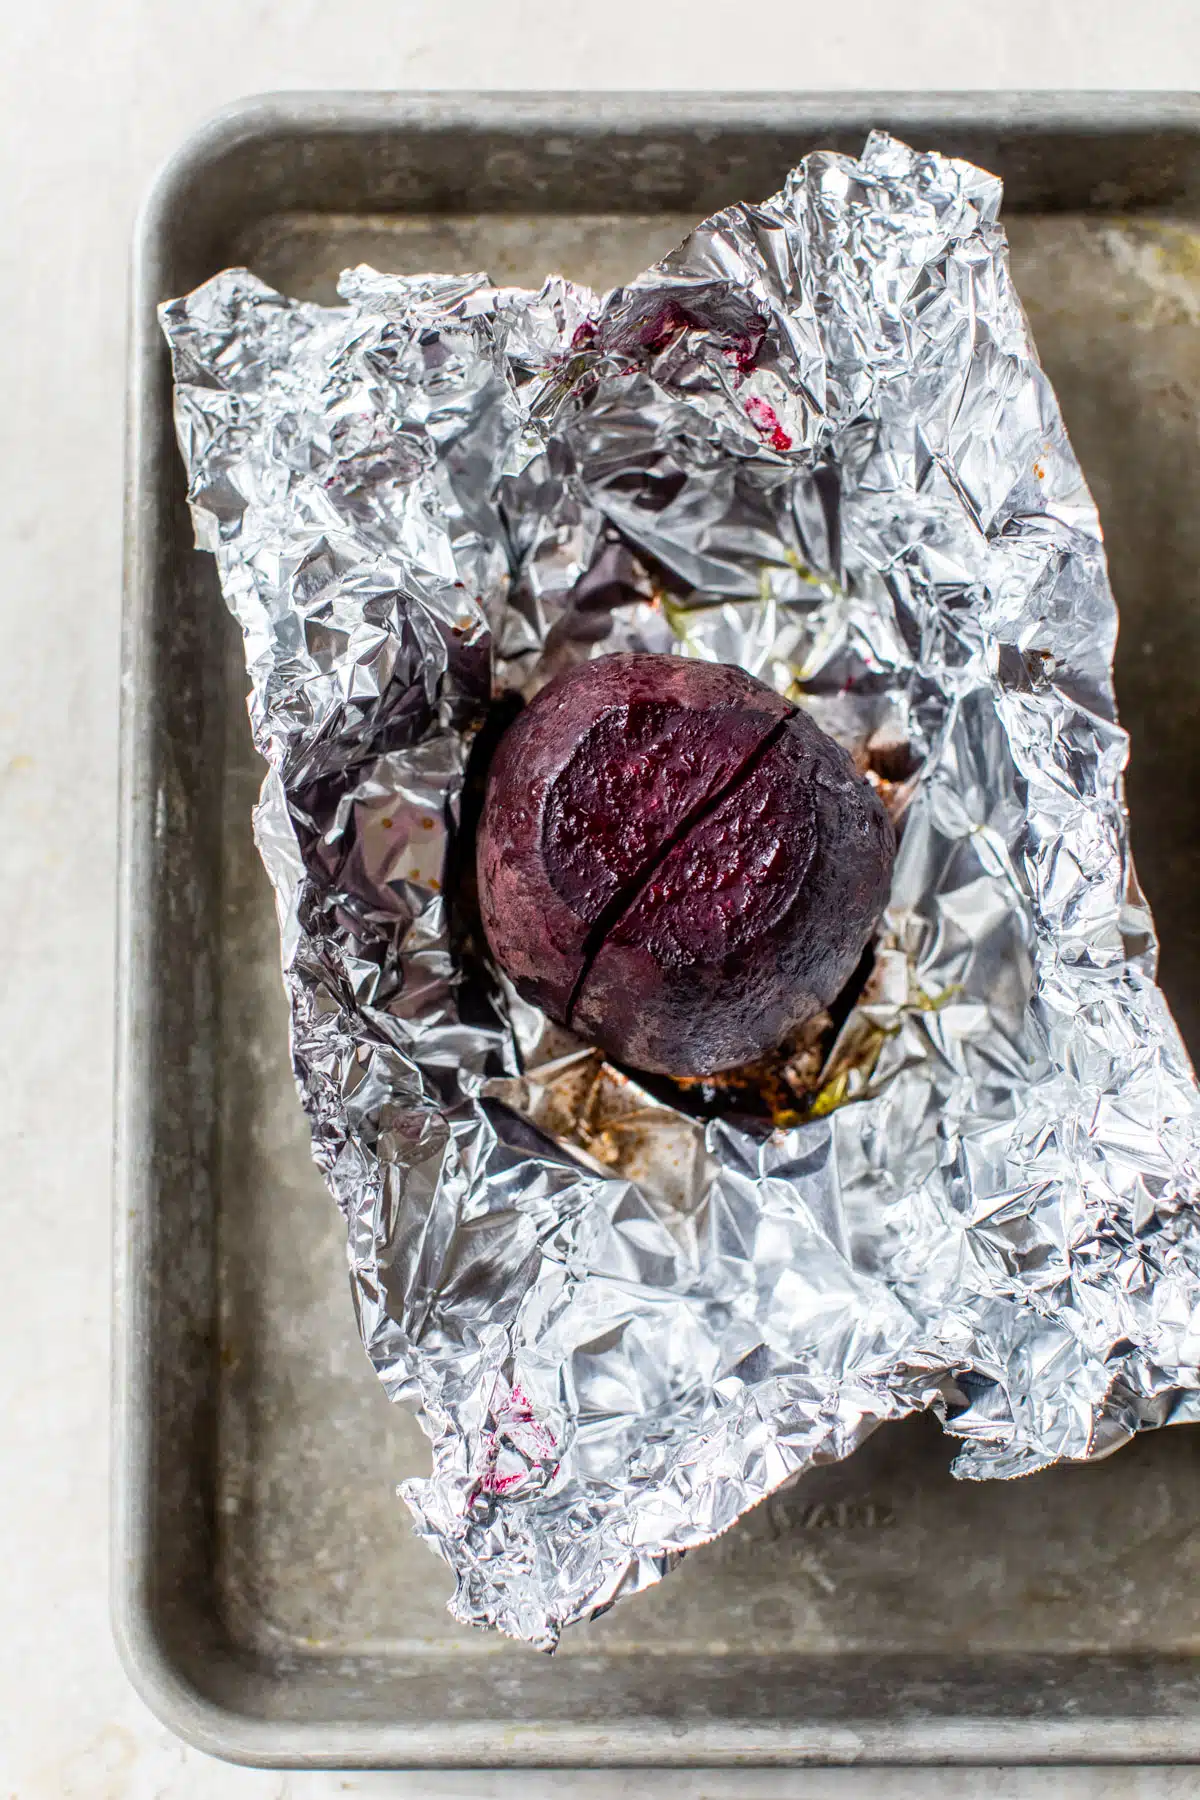 a roasted beet on aluminum foil on a baking sheet